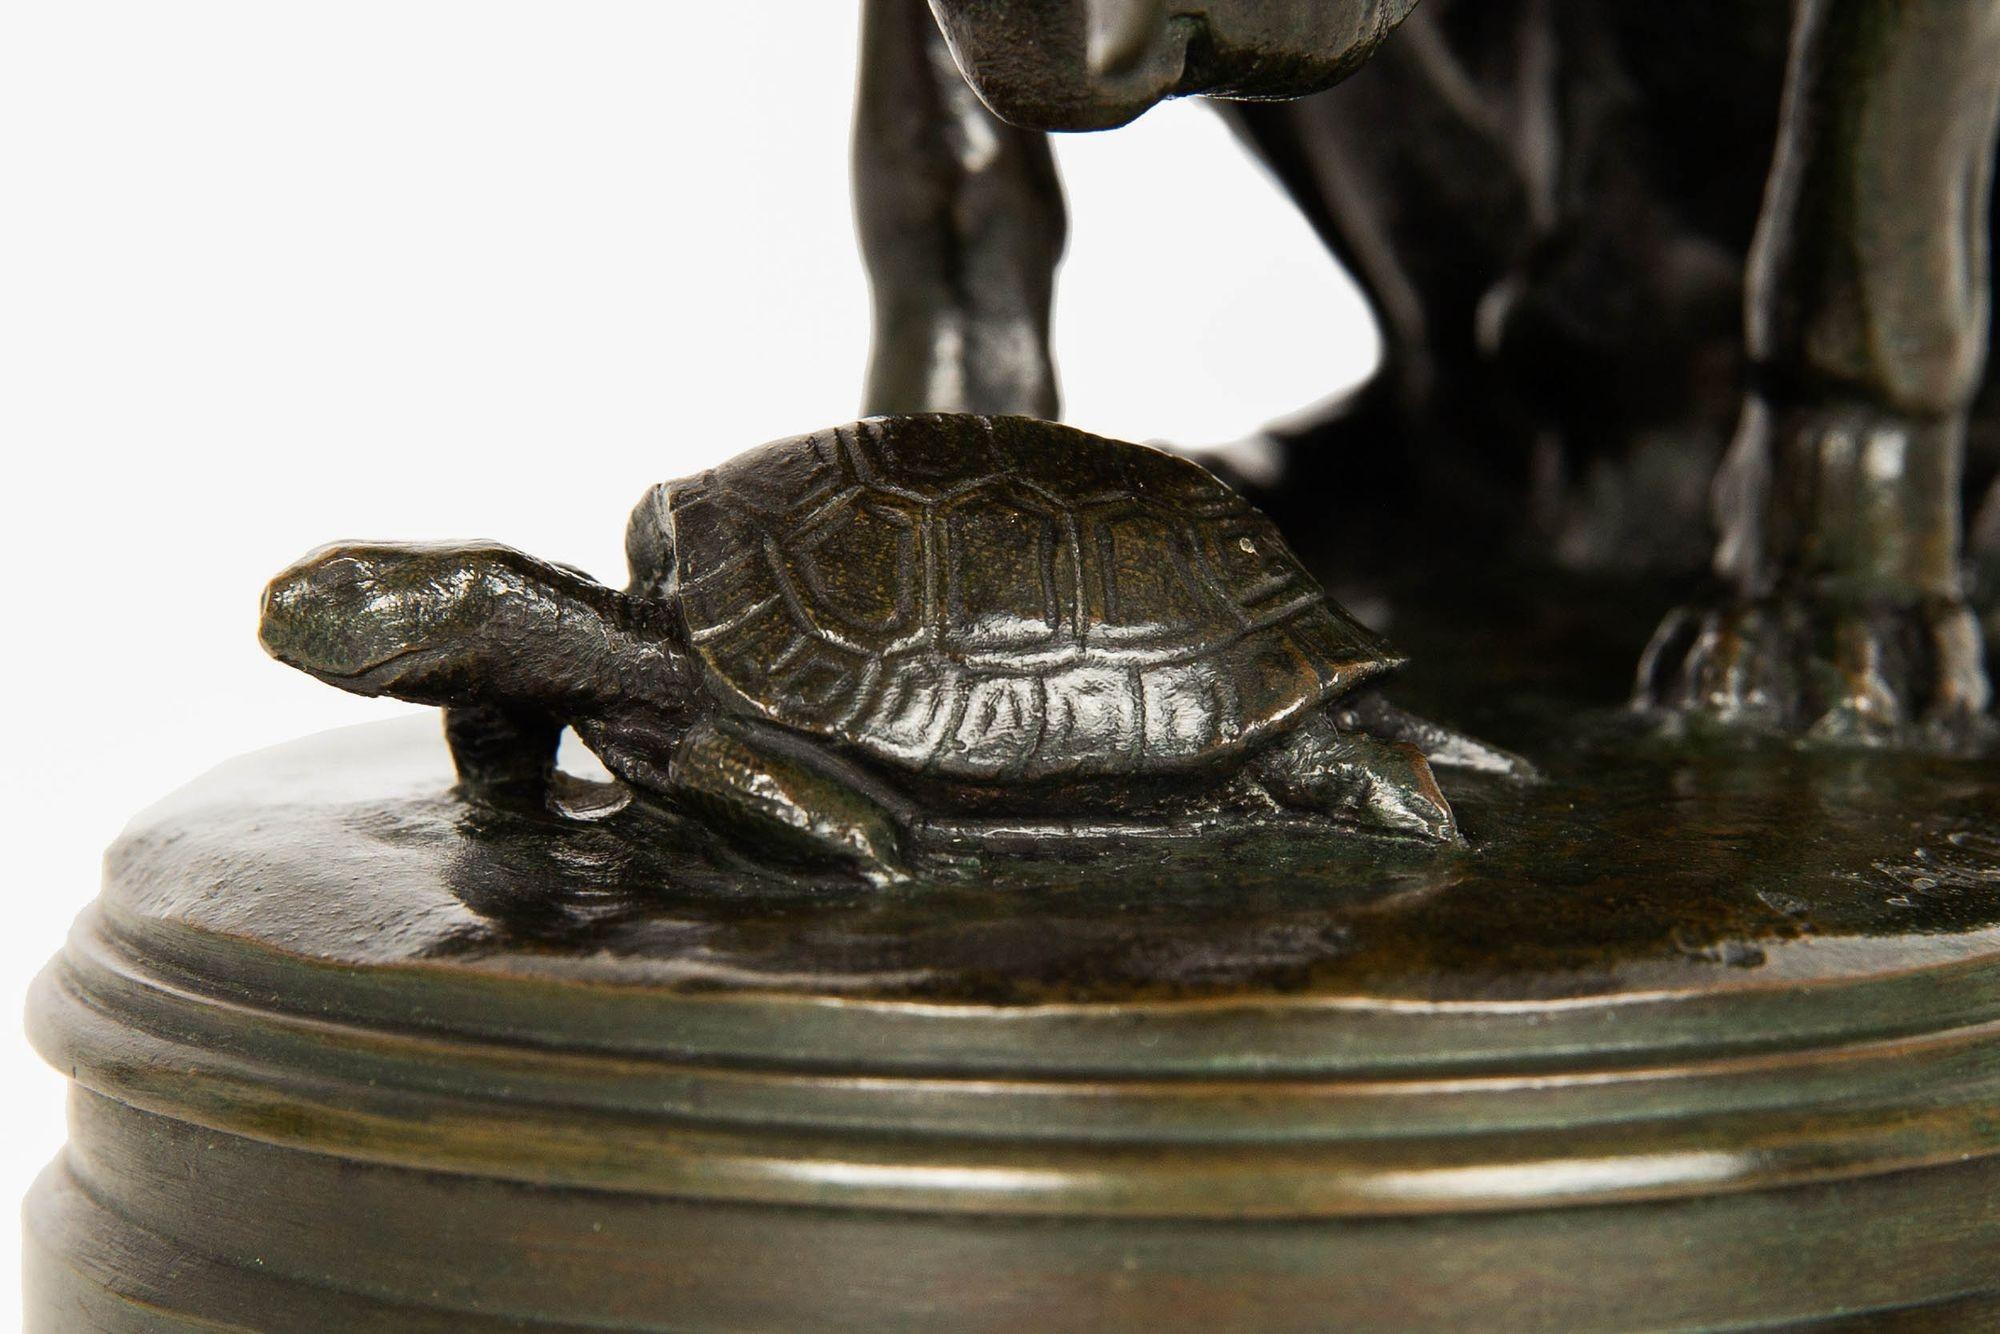 French Antique Bronze Sculpture “Hound & Tortoise” by Henri Jacquemart For Sale 3